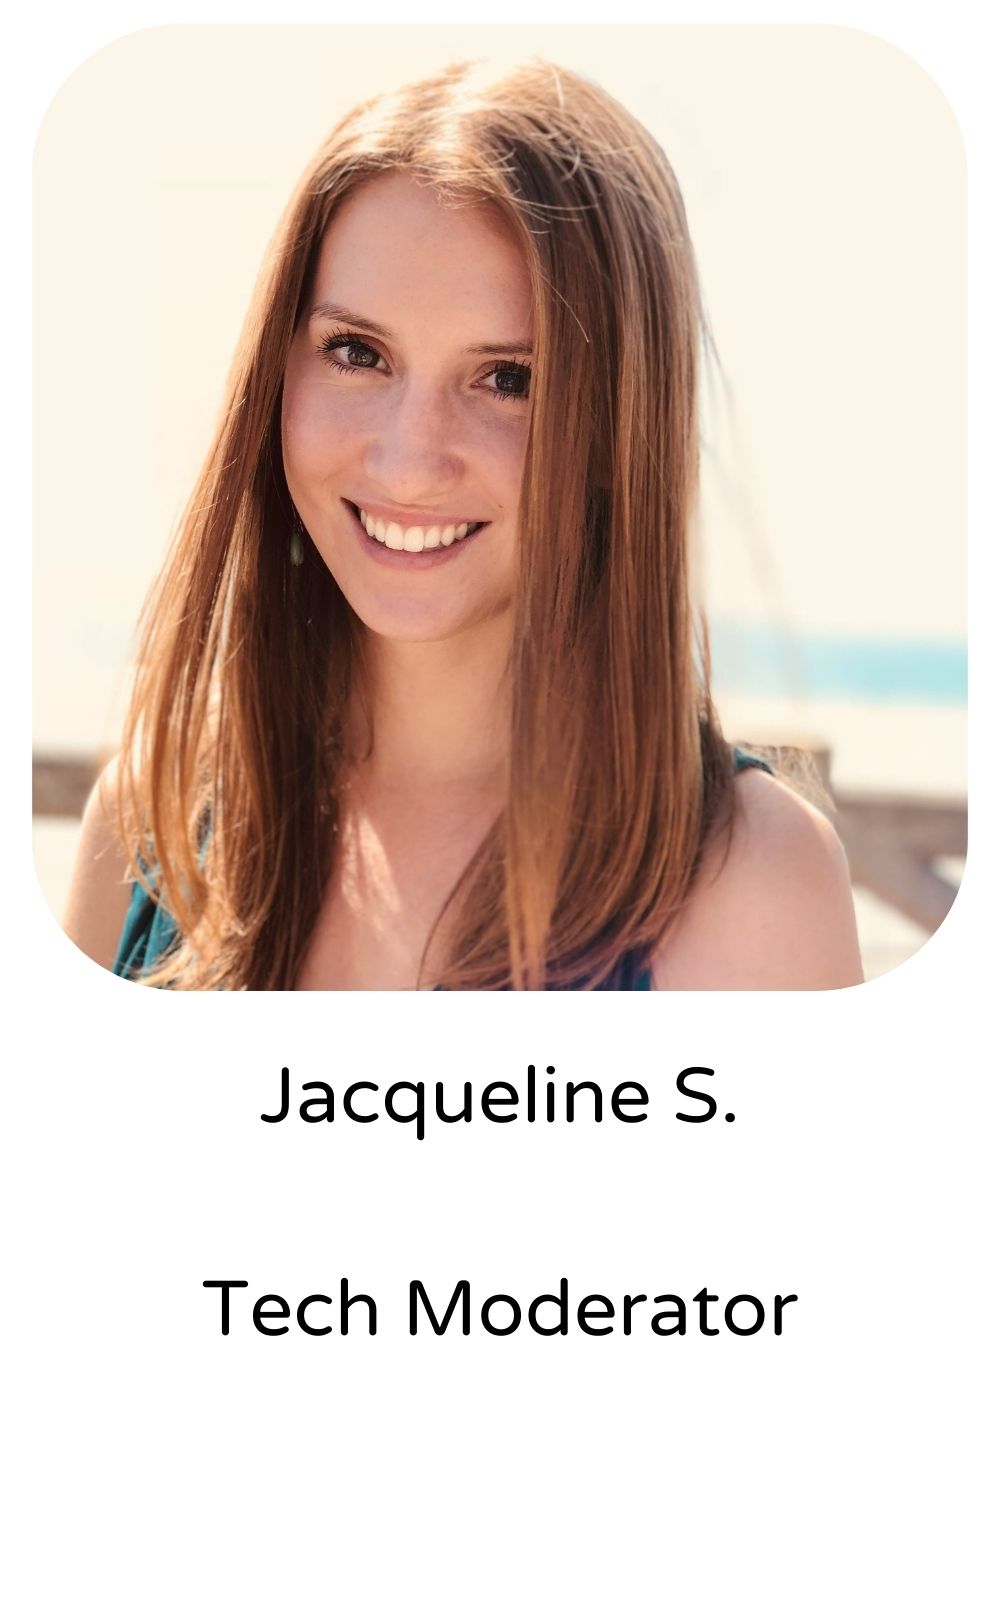 Jacqueline S, Tech Moderator